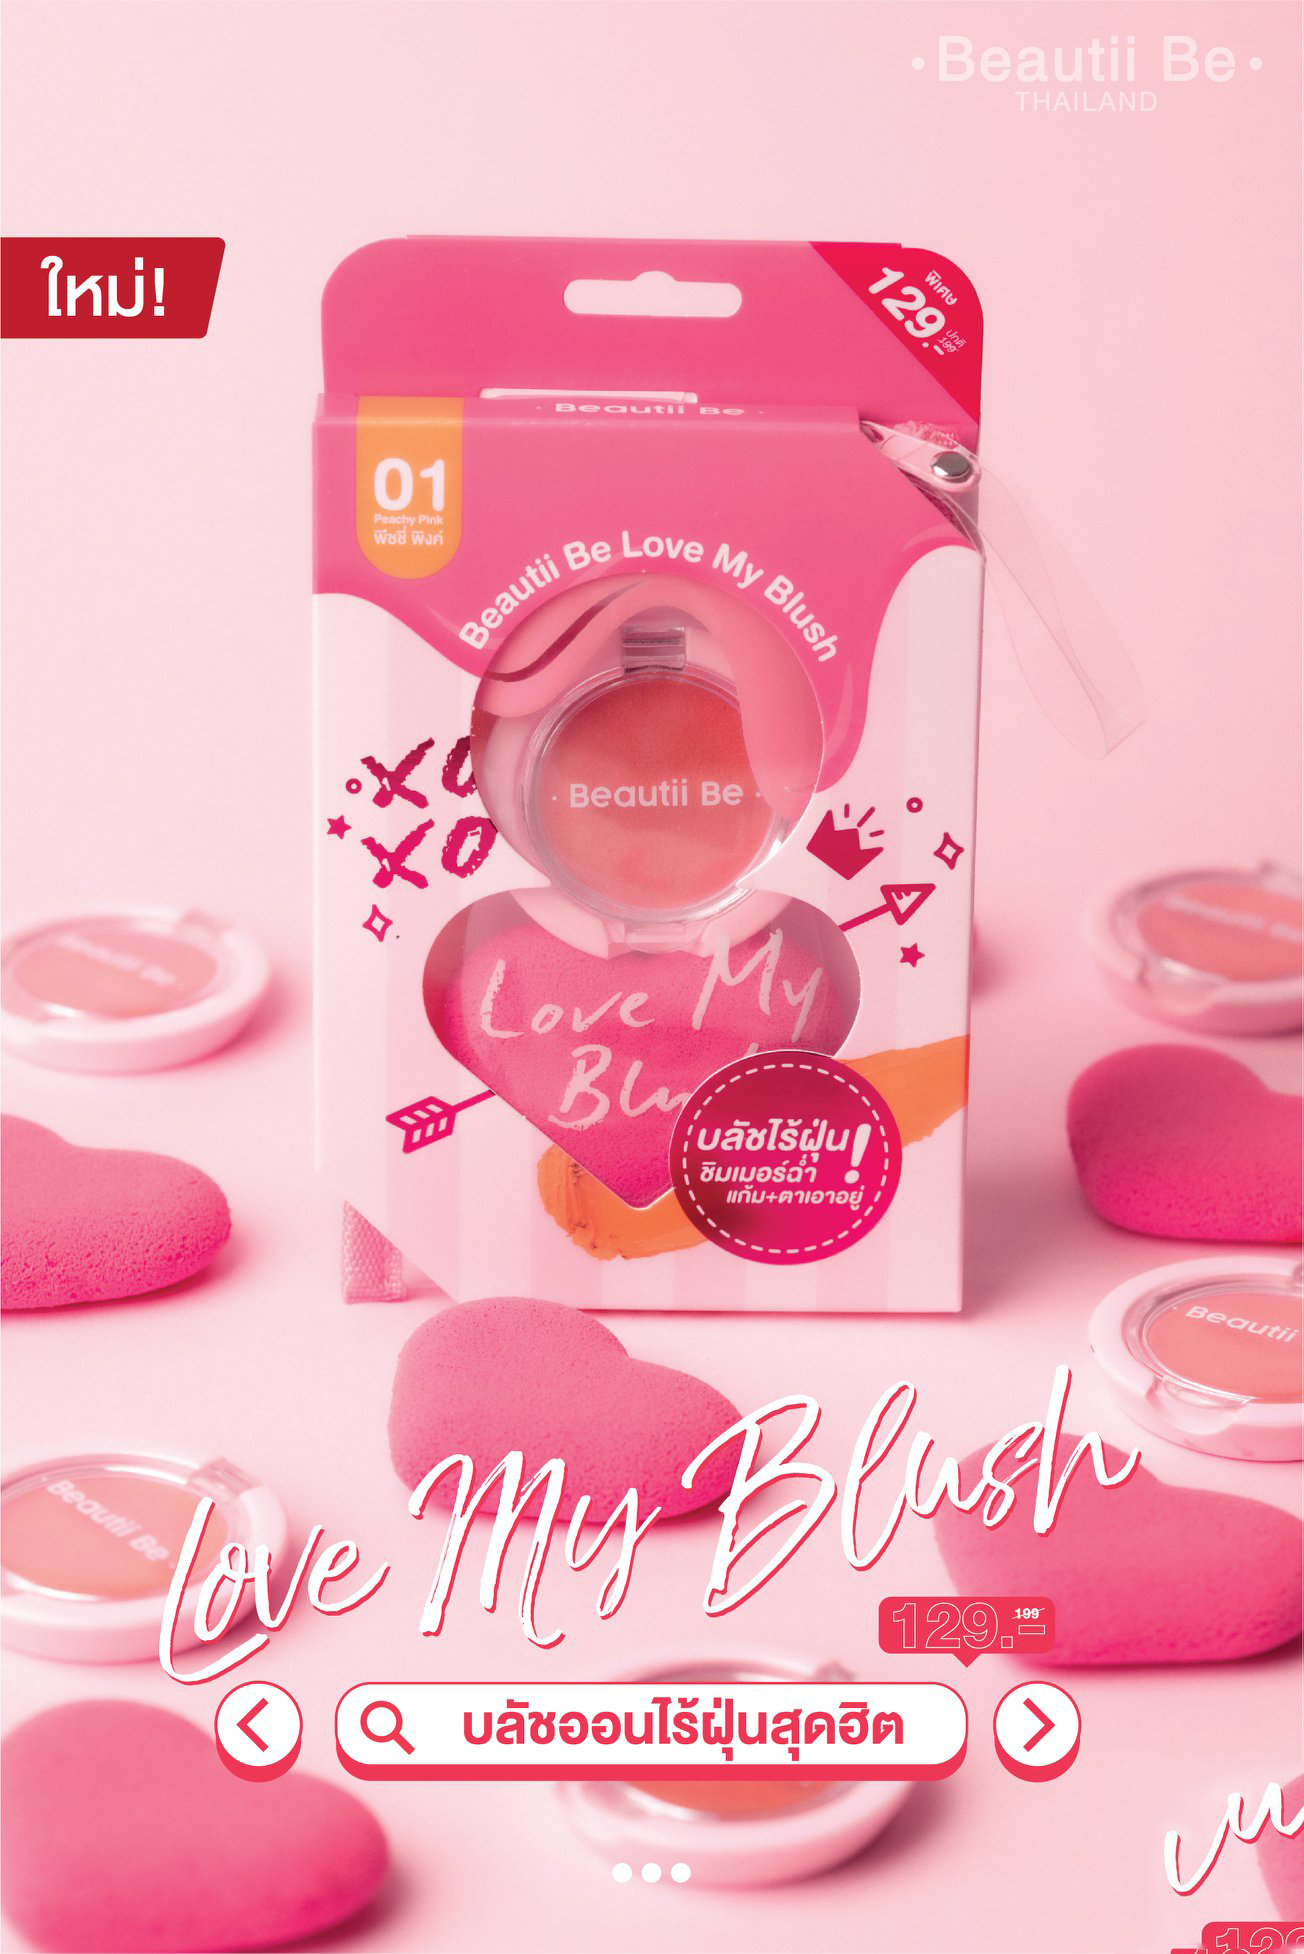 Beautii Be Love My Blush #01 Peachy Pink 2.7g บรัชออนไร้ฝุ่น เนื้อแคชเมียร์